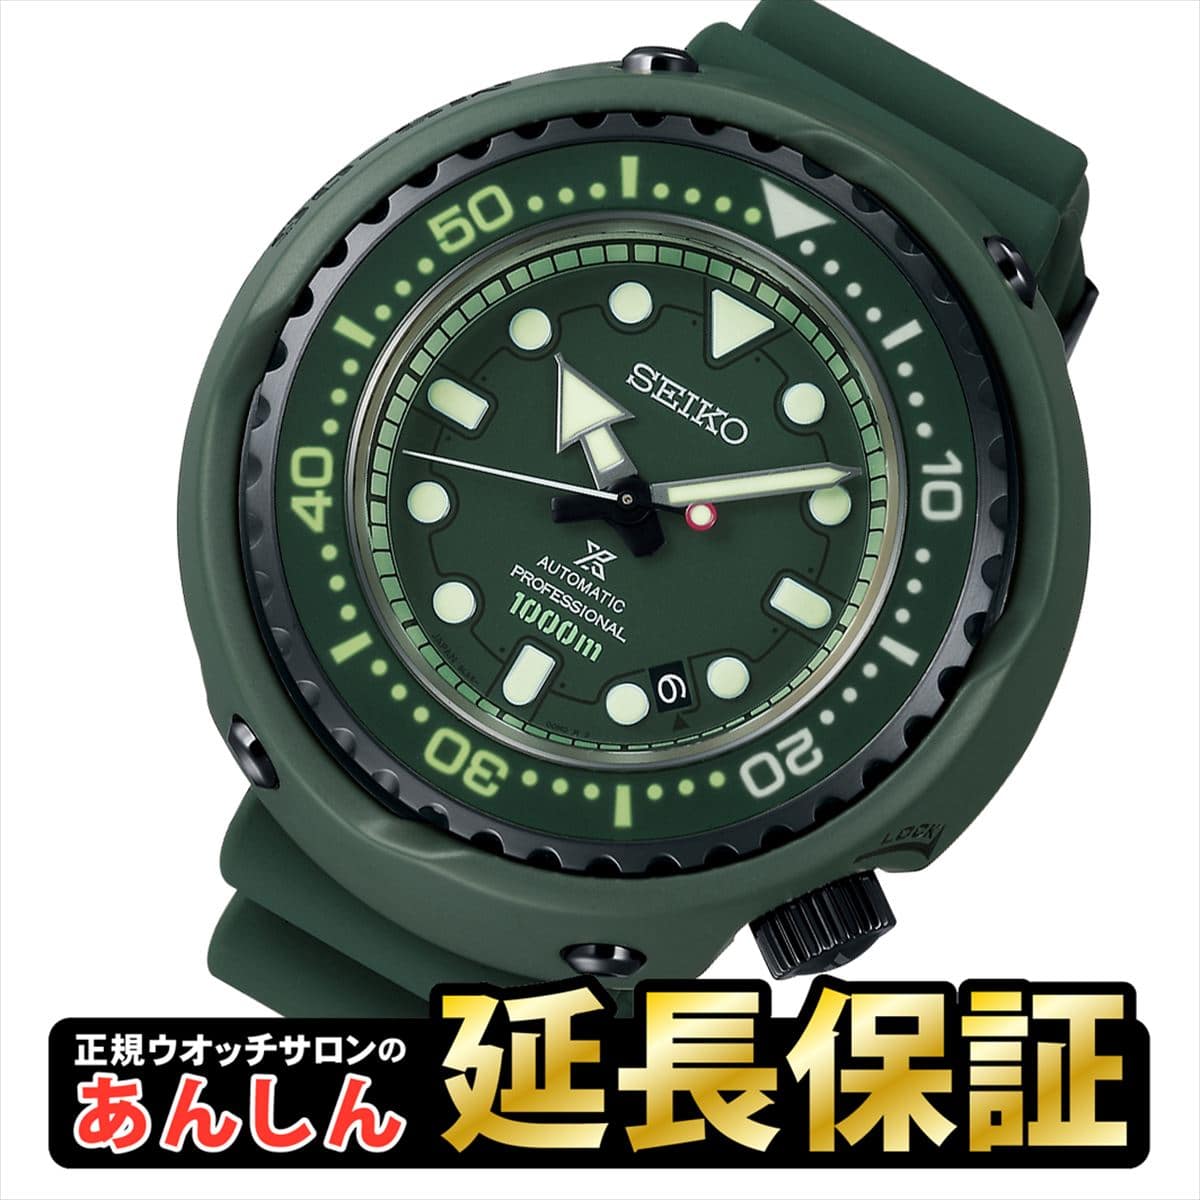 New]Seiko Prospex Men's Automatic Professional Divers Watch SBDX027 - BE  FORWARD Store